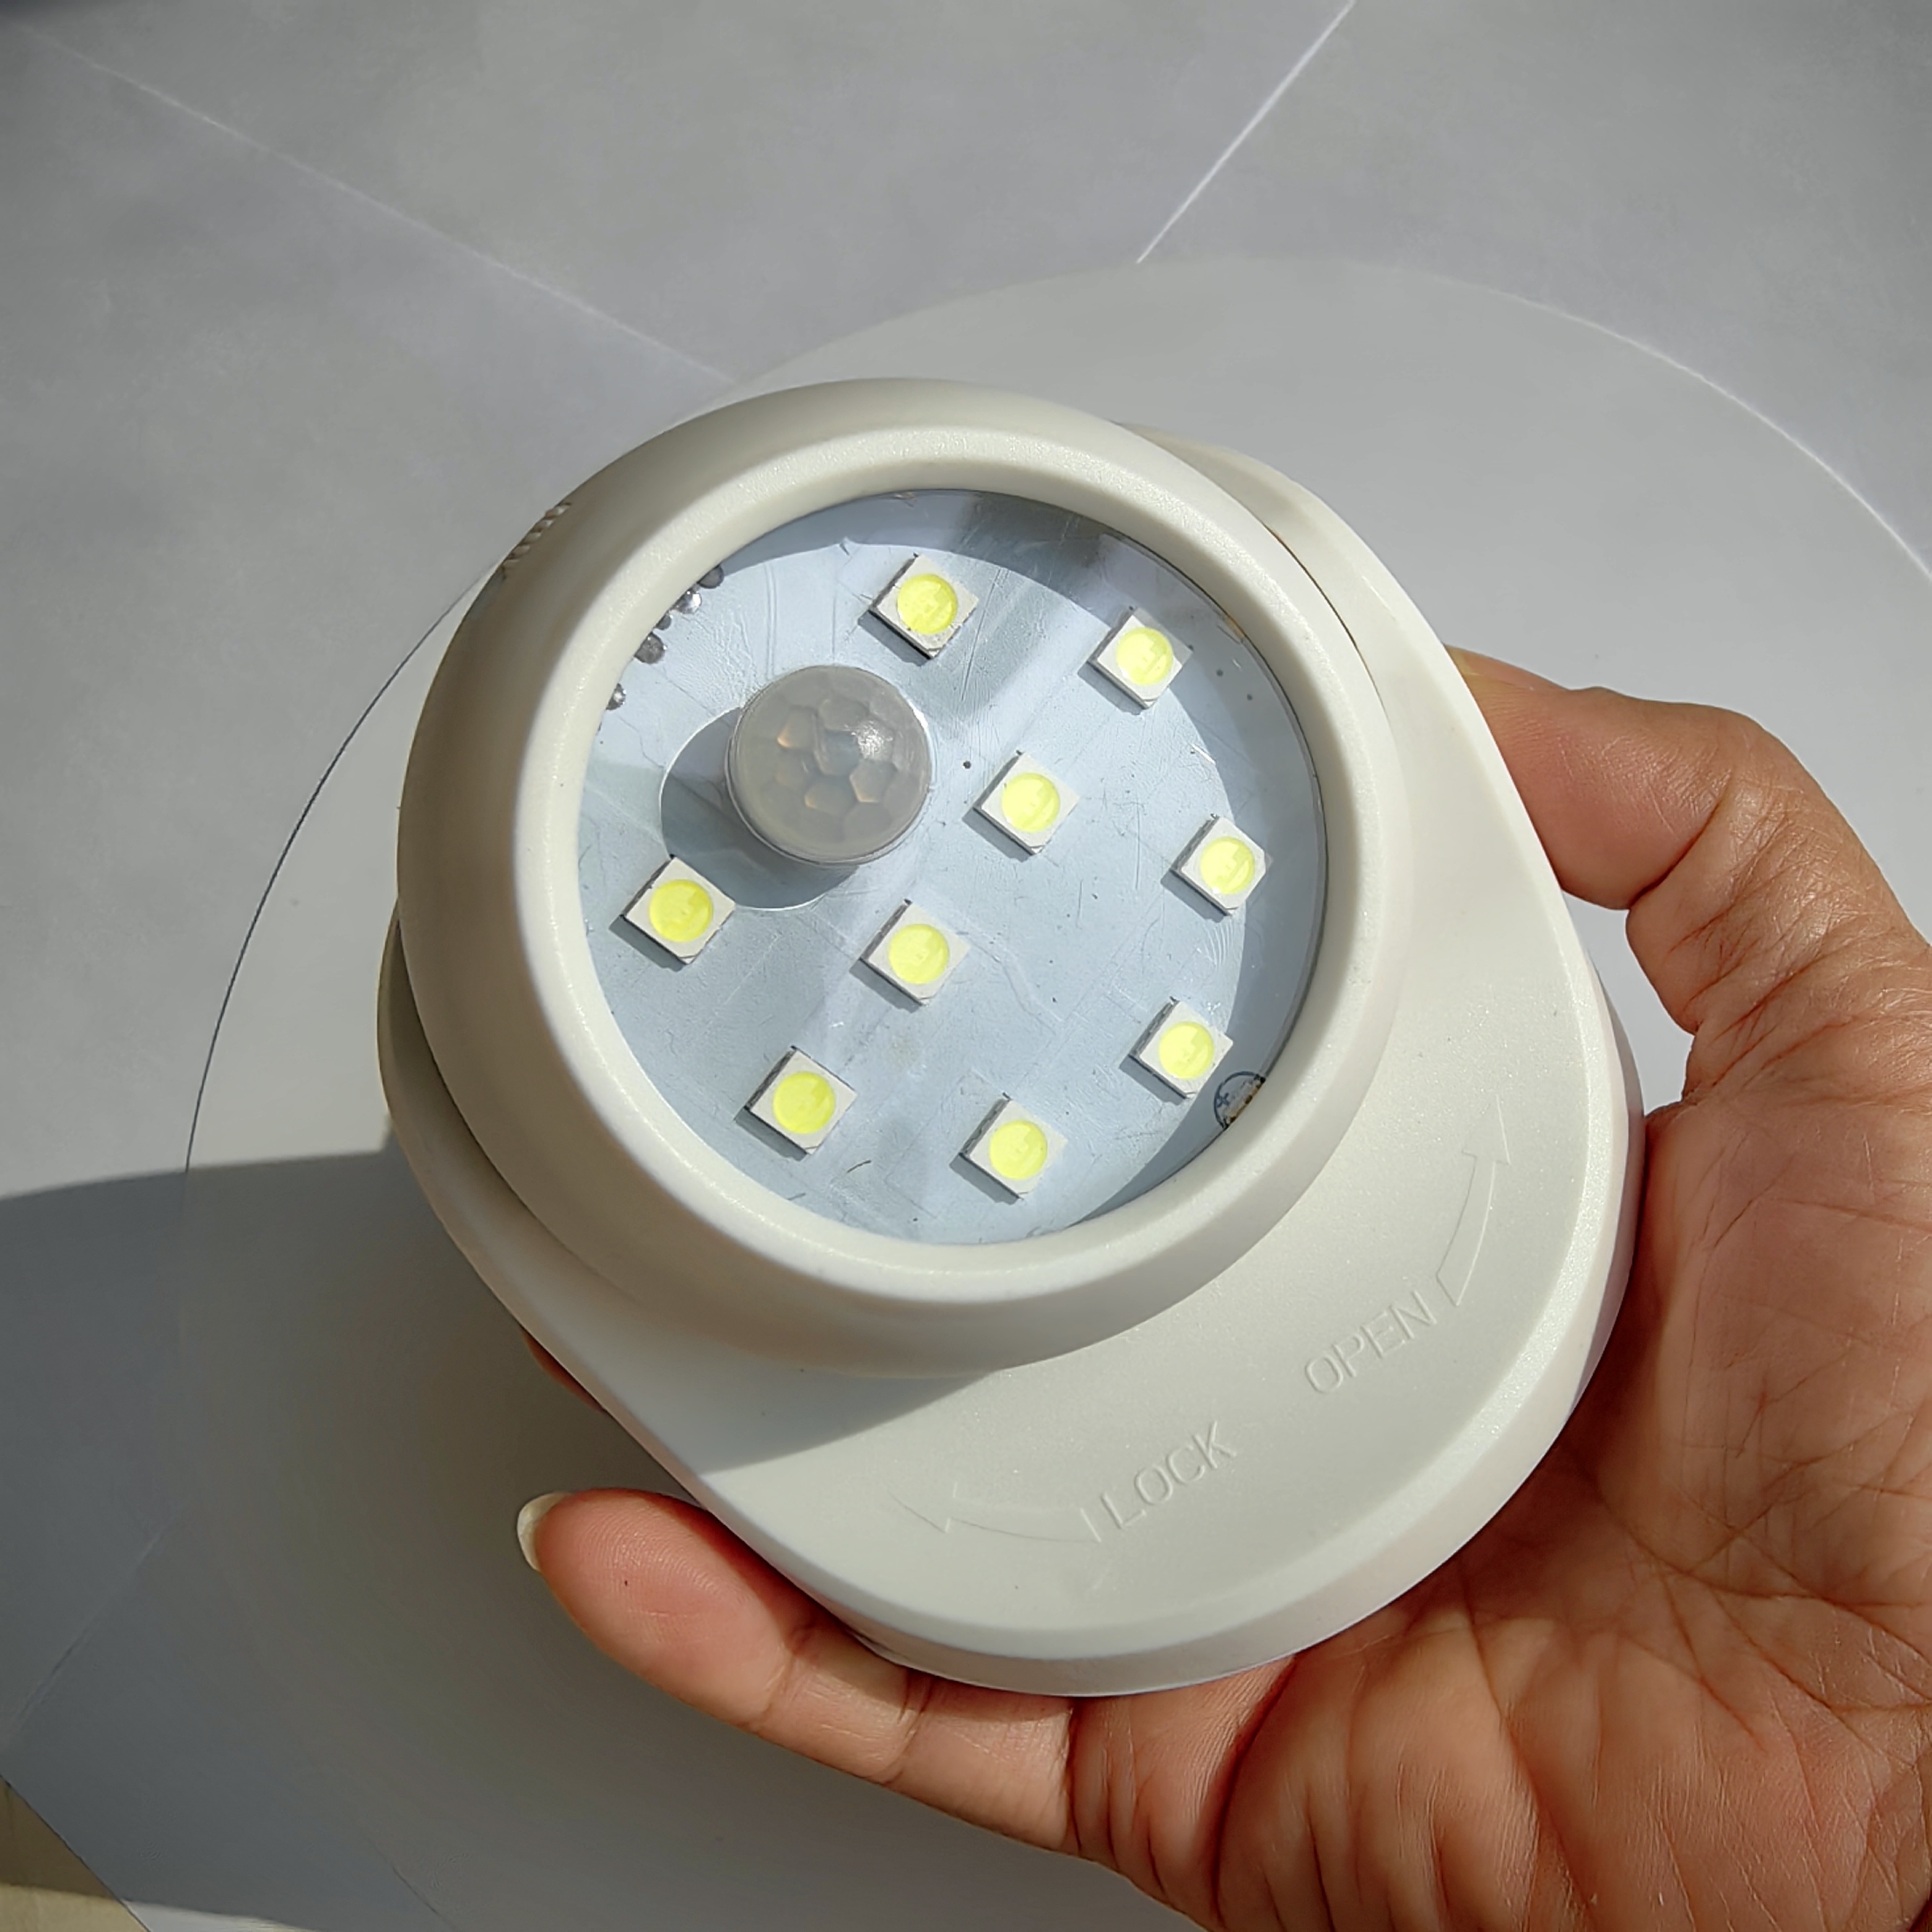 Compre Sensor De Luz Nocturna, Sensor De Movimiento Para Interiores, Led De  Pared Al Aire Libre Con Sensor De Movimiento Con Patente De La Ue y Luz  Nocturna de China por 3.6